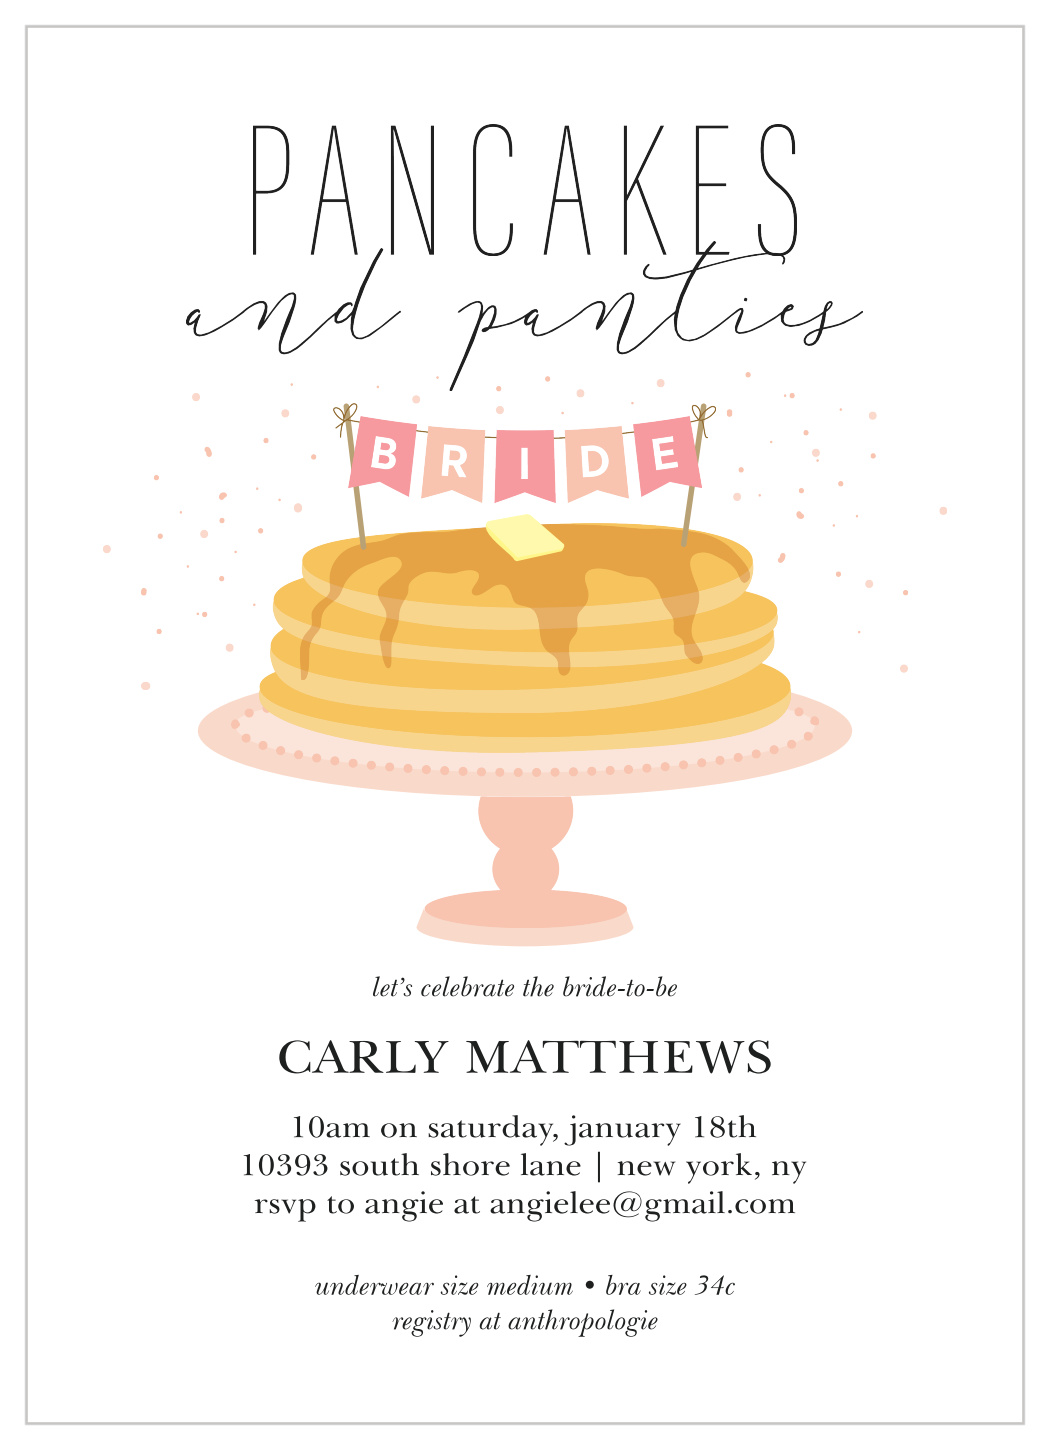 Pancakes & Panties Bridal Shower Invitations by Basic Invite